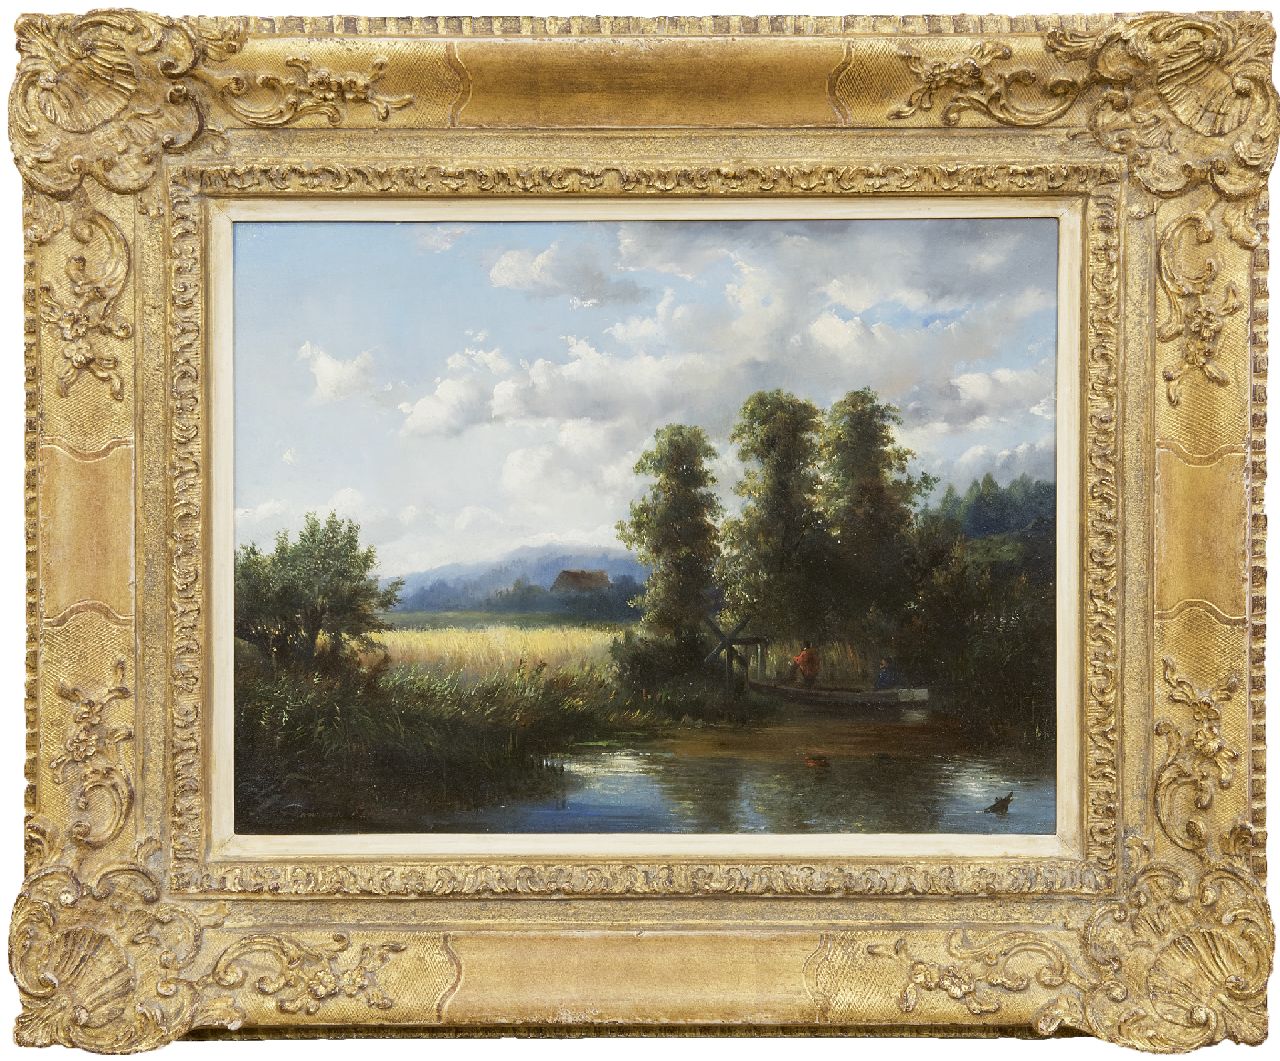 Kruseman van Elten H.D.  | Hendrik Dirk Kruseman van Elten | Paintings offered for sale | Landscape with cornfield and fishermen, oil on panel 28.0 x 37.0 cm, signed l.l.